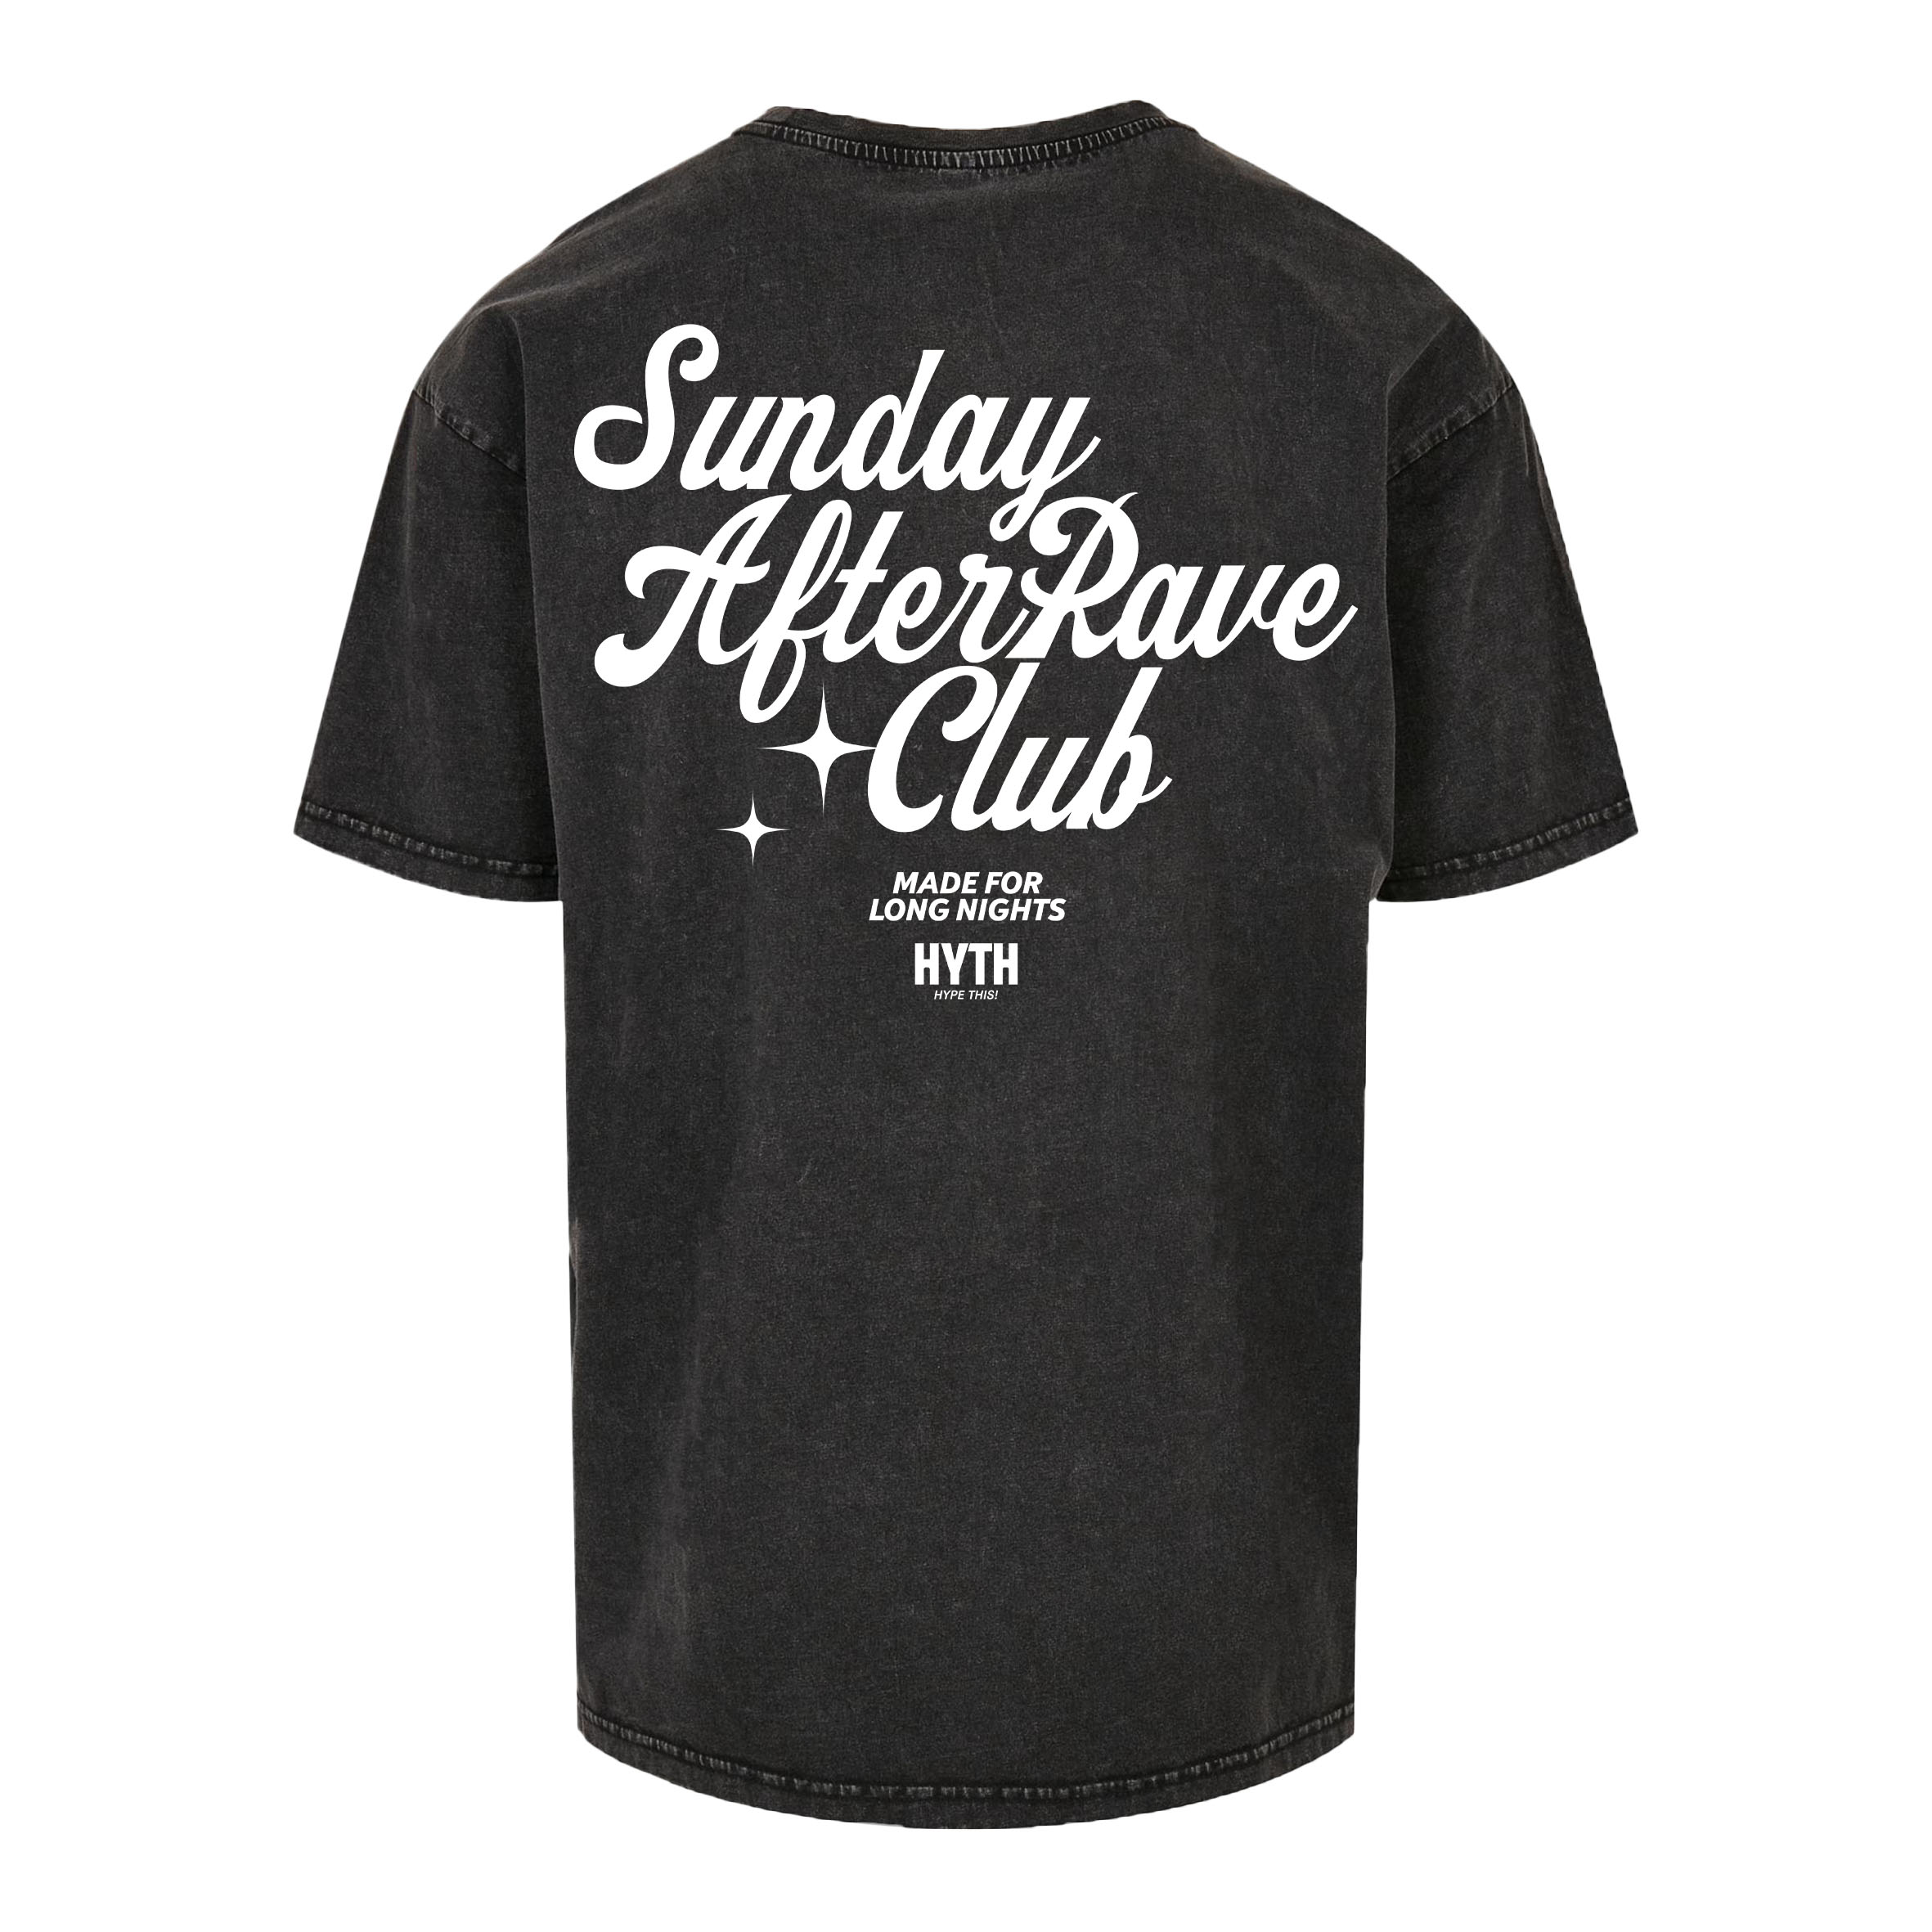 HYTH - Sunday After Hour Rave Club - Shirt - black